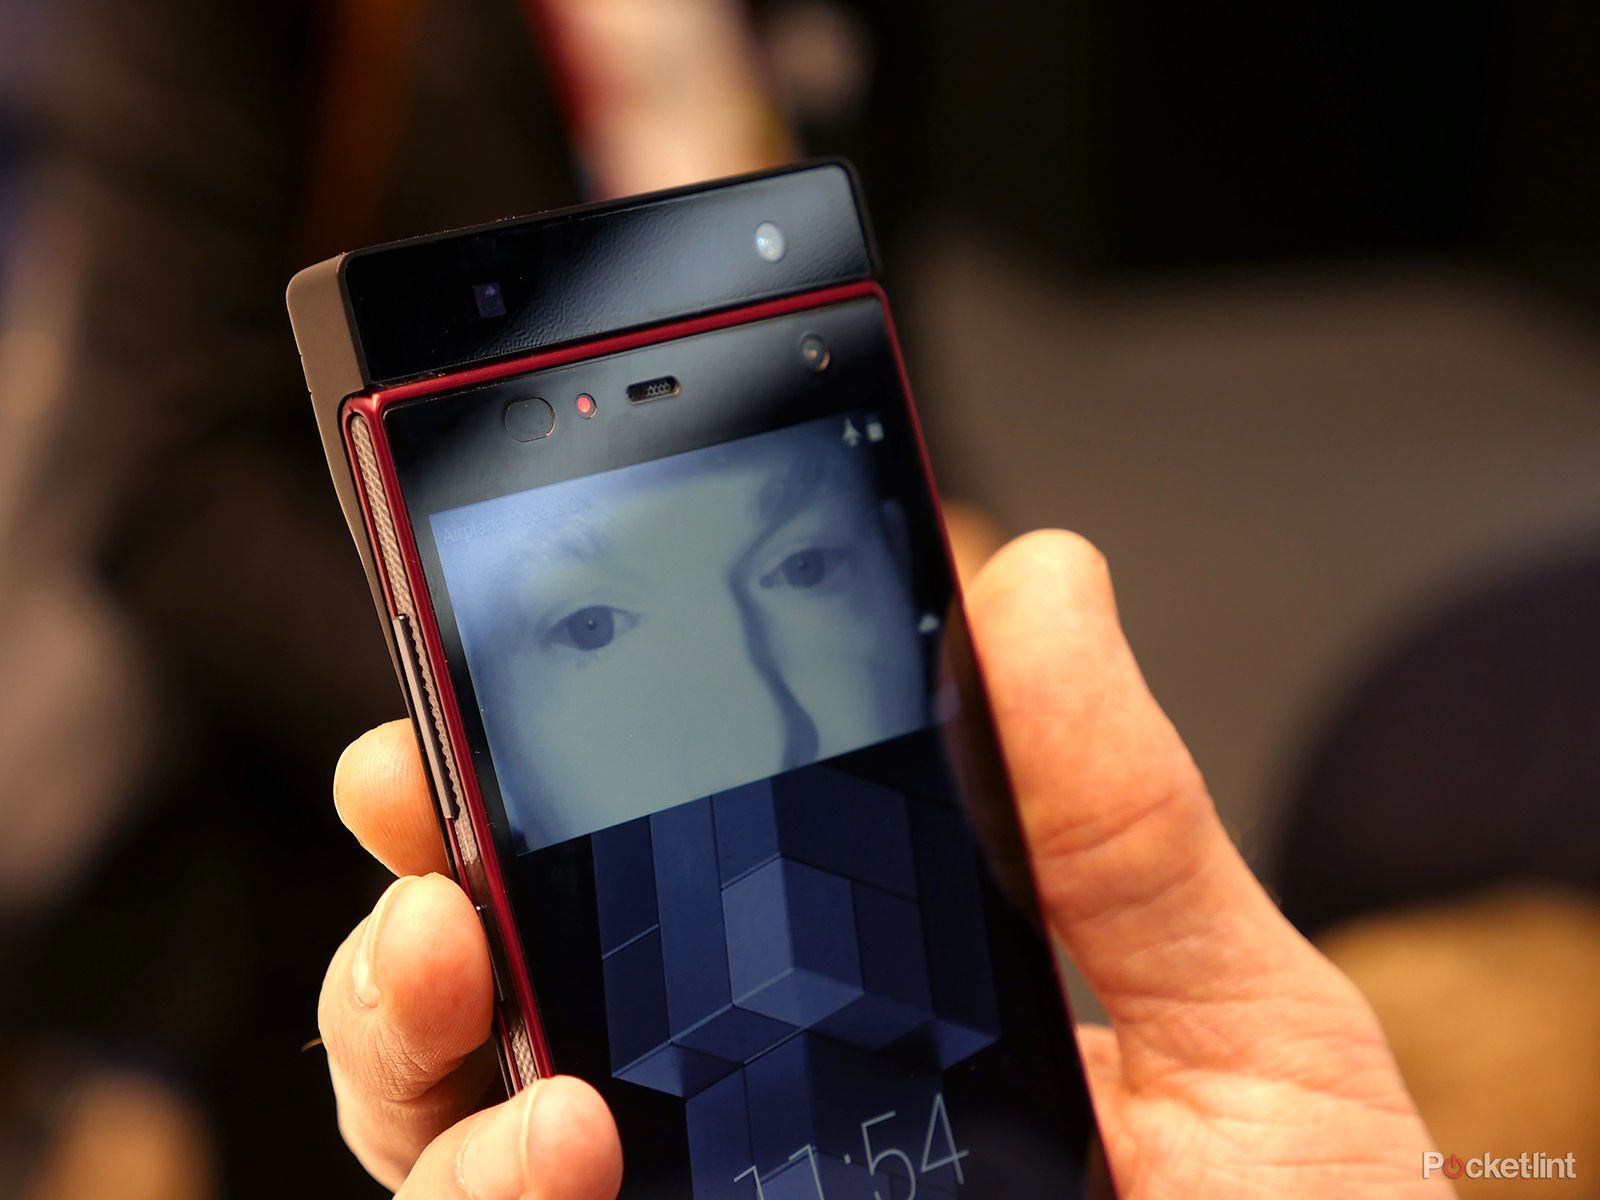 watch as fujitsu iris recognition tech unlocks smartphone at a glance literally video  image 1